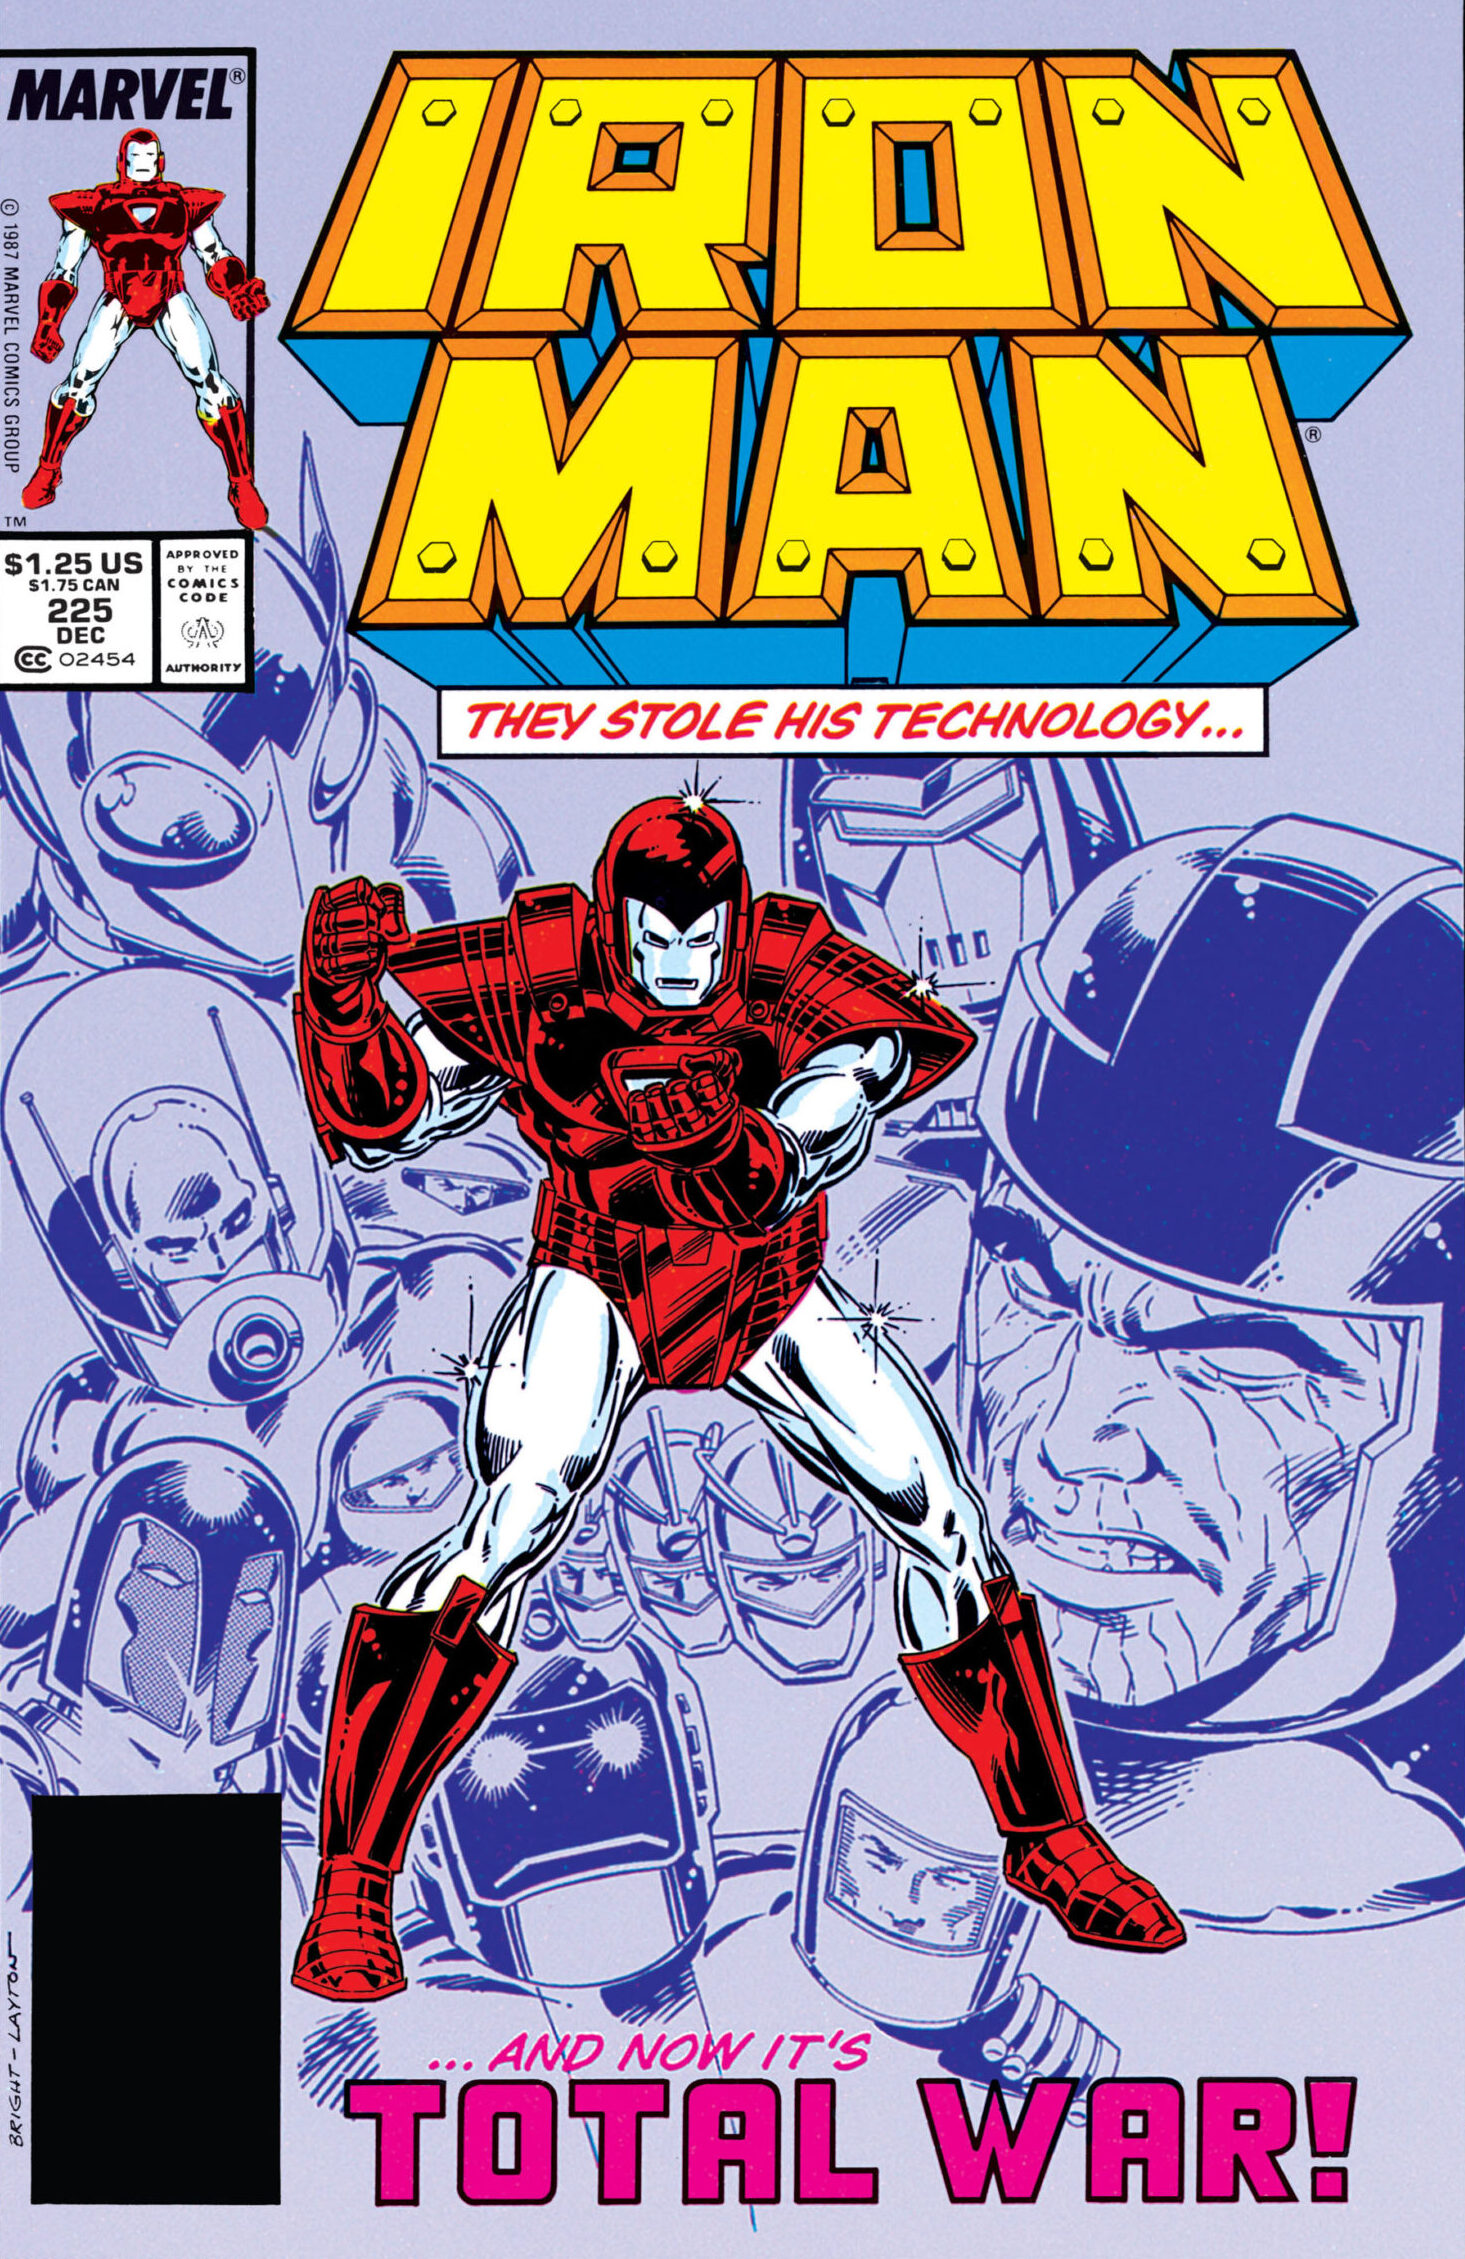 Tony Stark is mad as hell on Mark Bright and Bob Layton's cover to Iron Man Vol. 1 #225 "Stark Wars, Chapter I" (1987), Marvel Comics